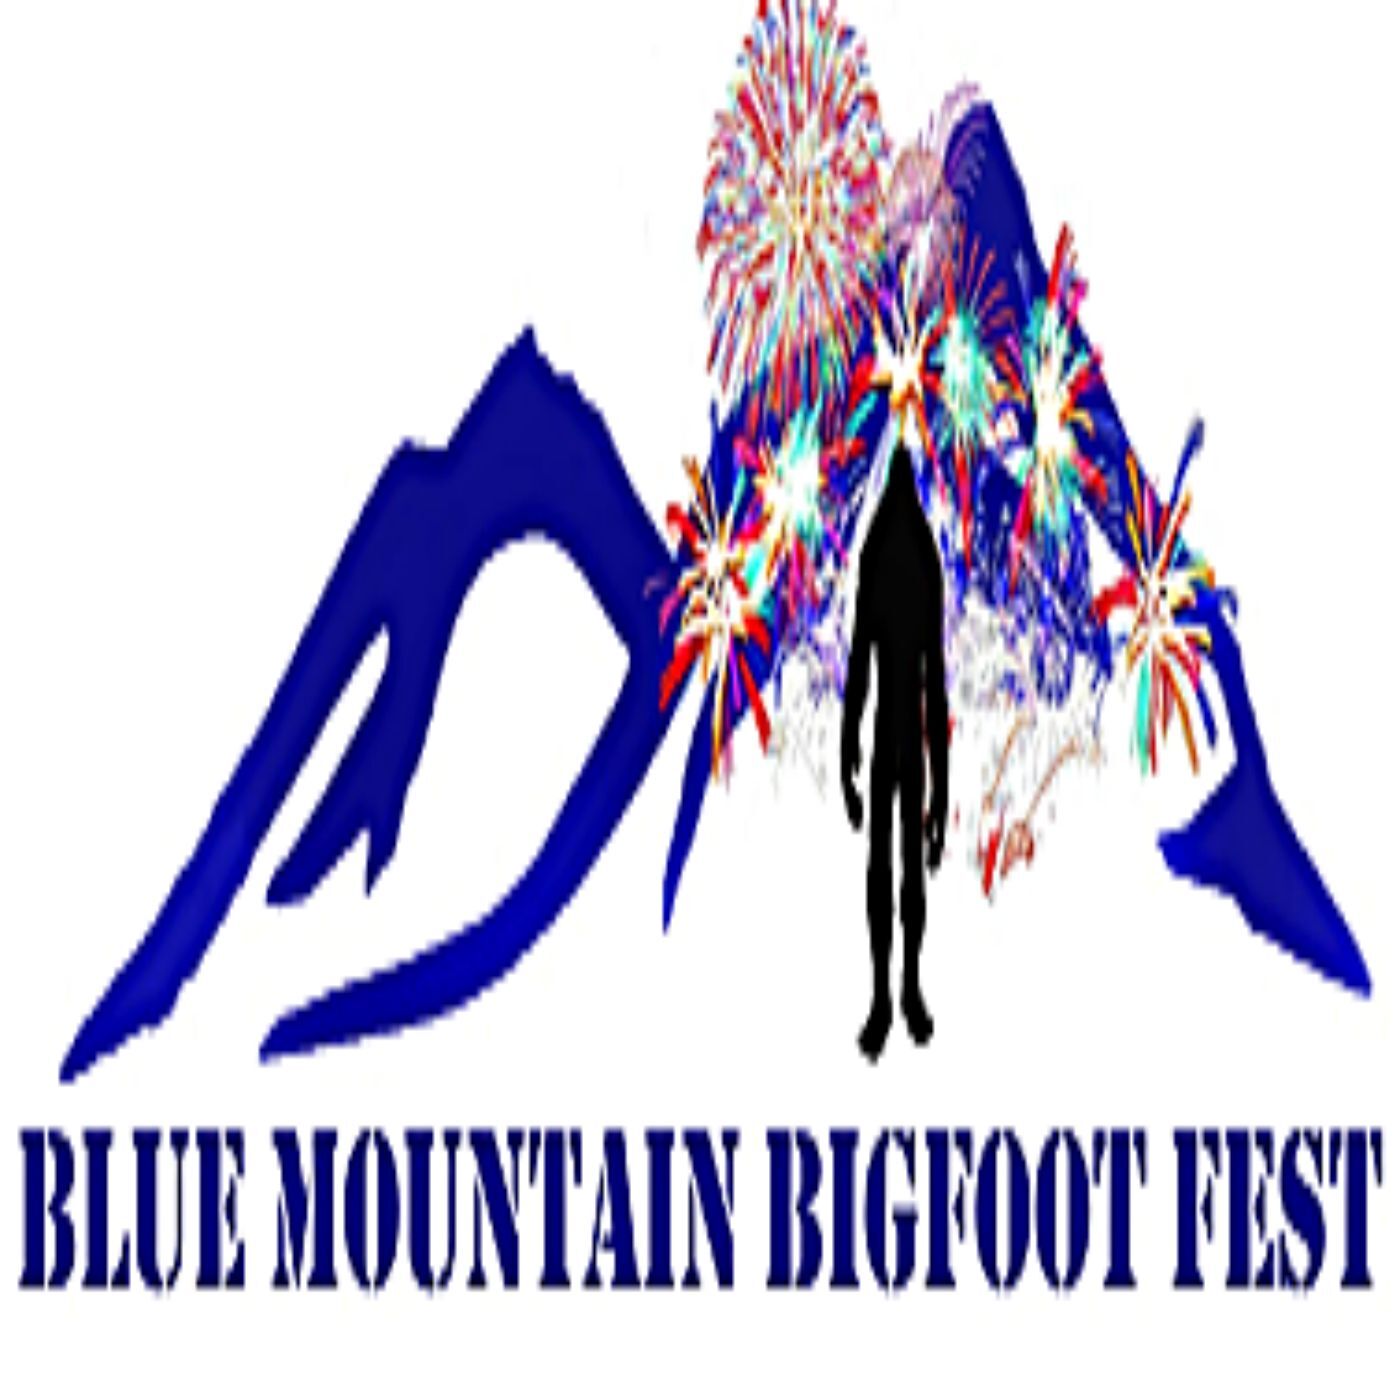 Ep. #315: BLUE MOUNTAIN BIGFOOT FEST 2019